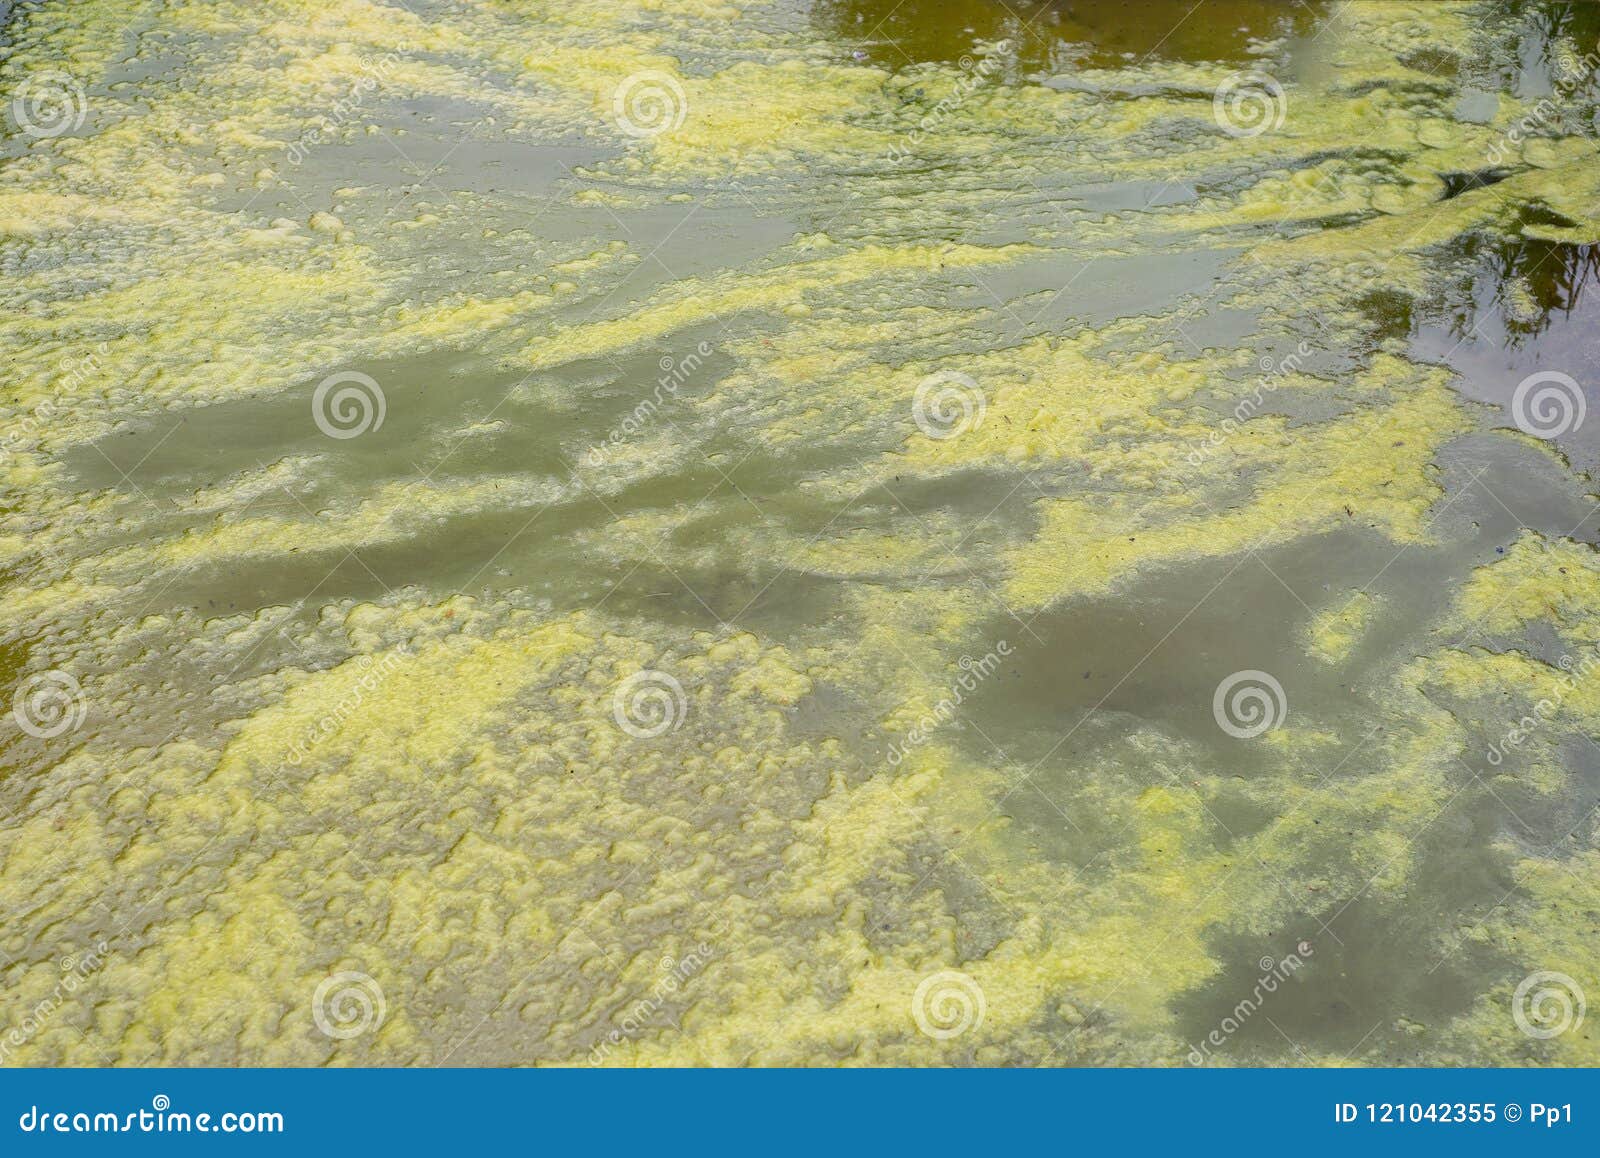 cyanobacteria blue-green algae bloom infection growing in pond lake river